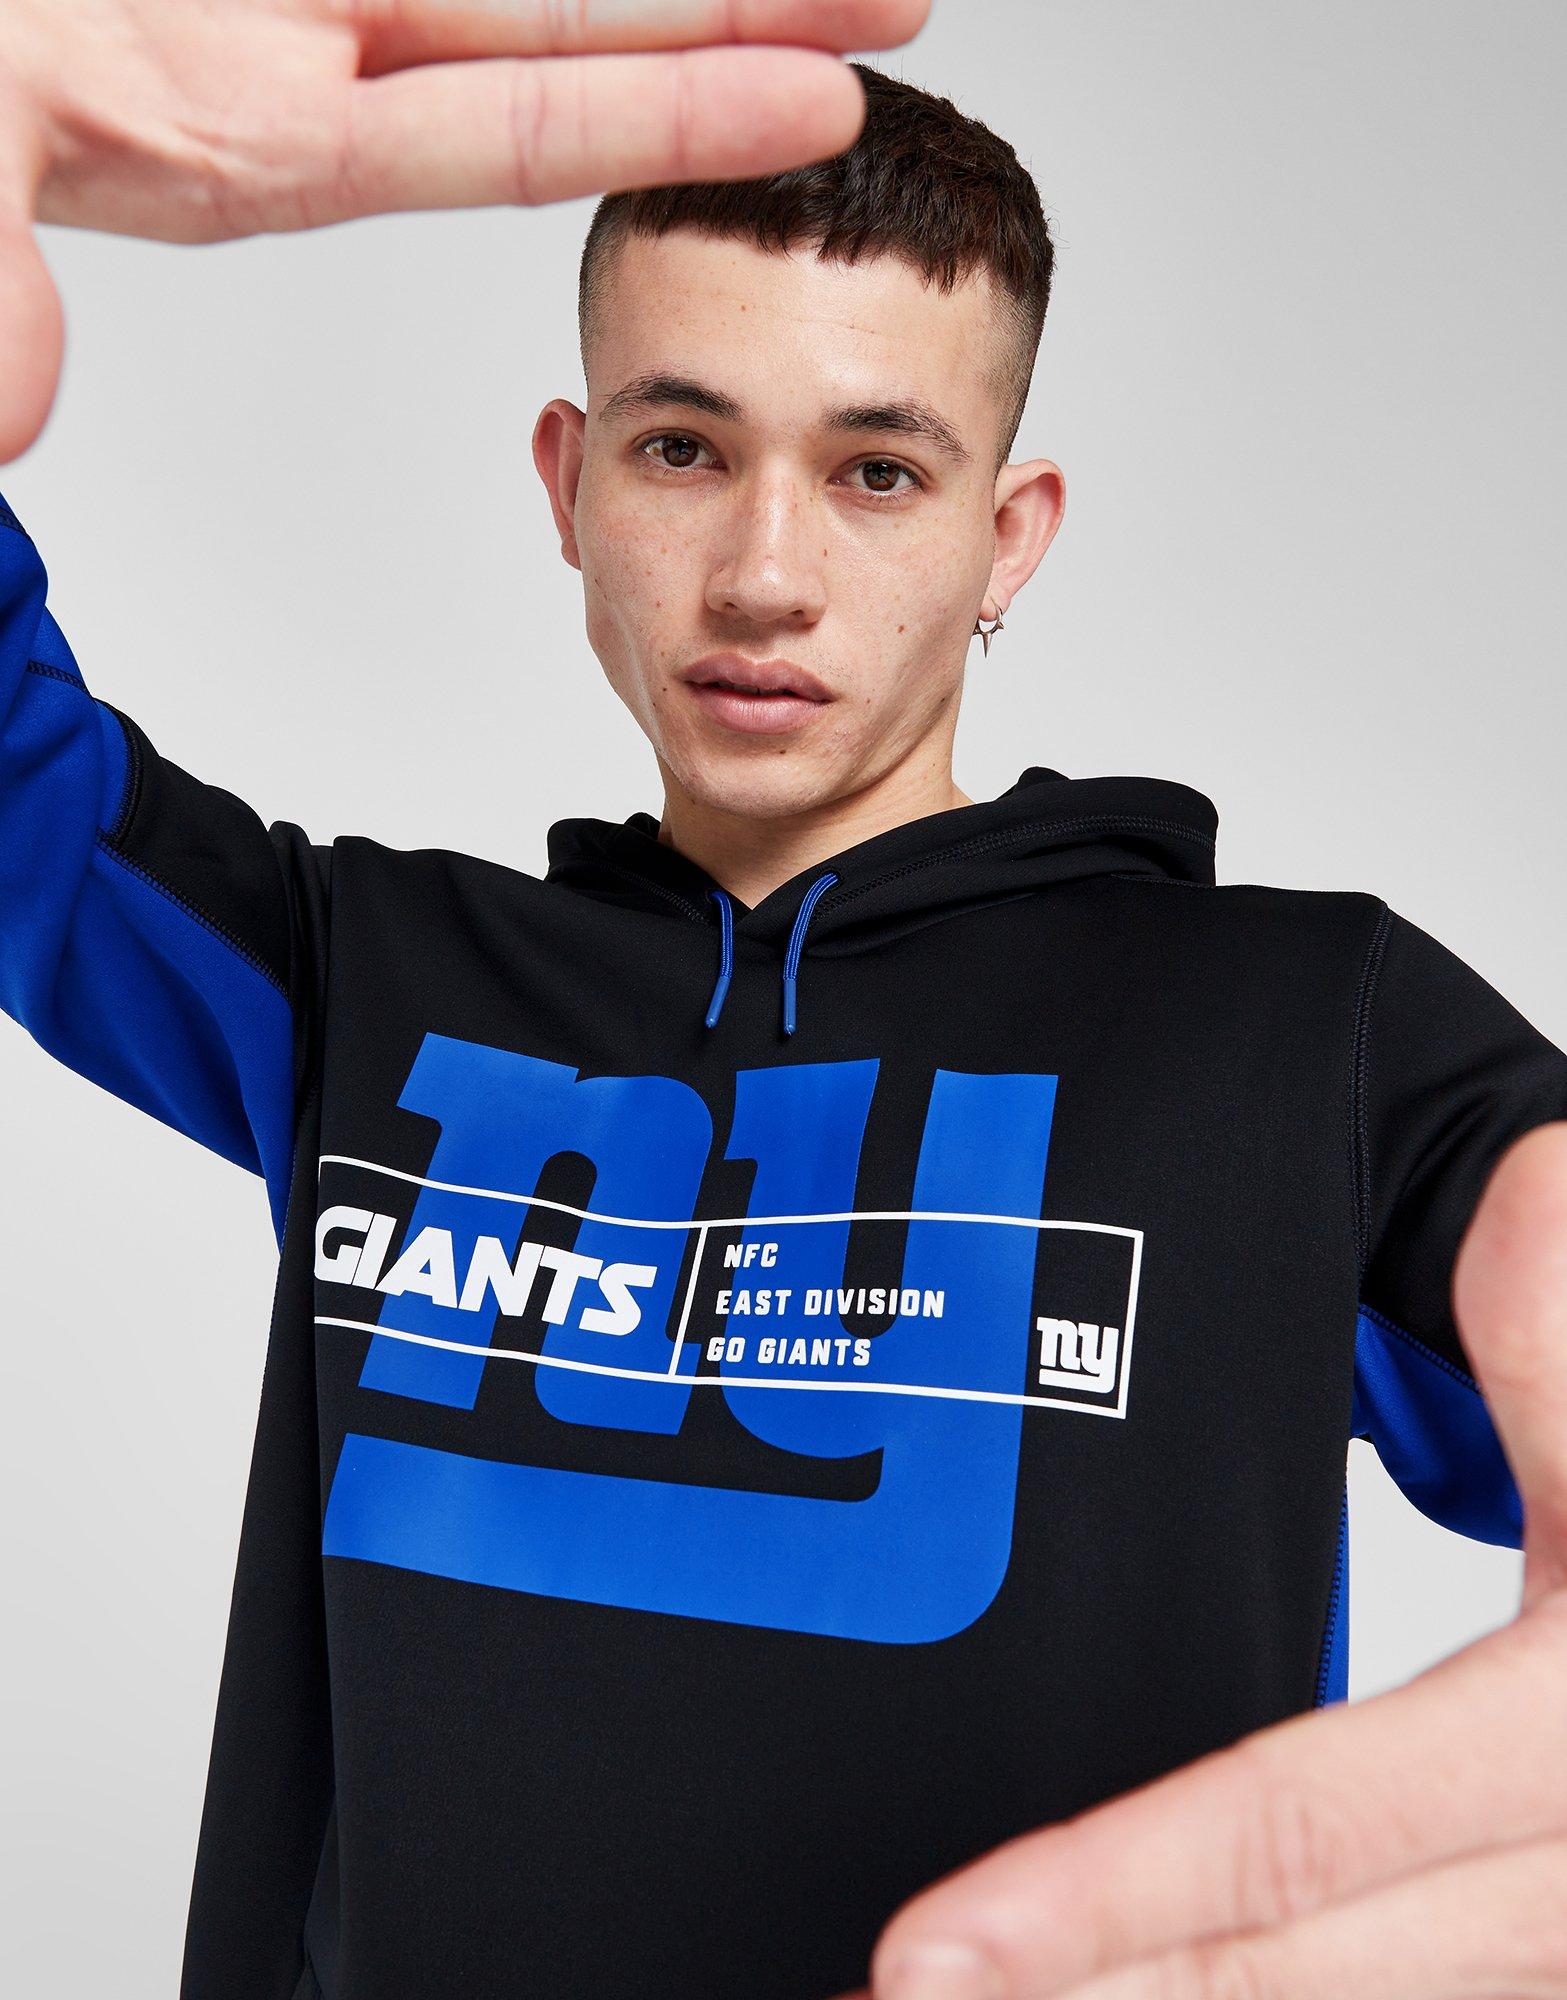 Vintage Inspired Baseball Knits Inspiration - NY Giants sweater at